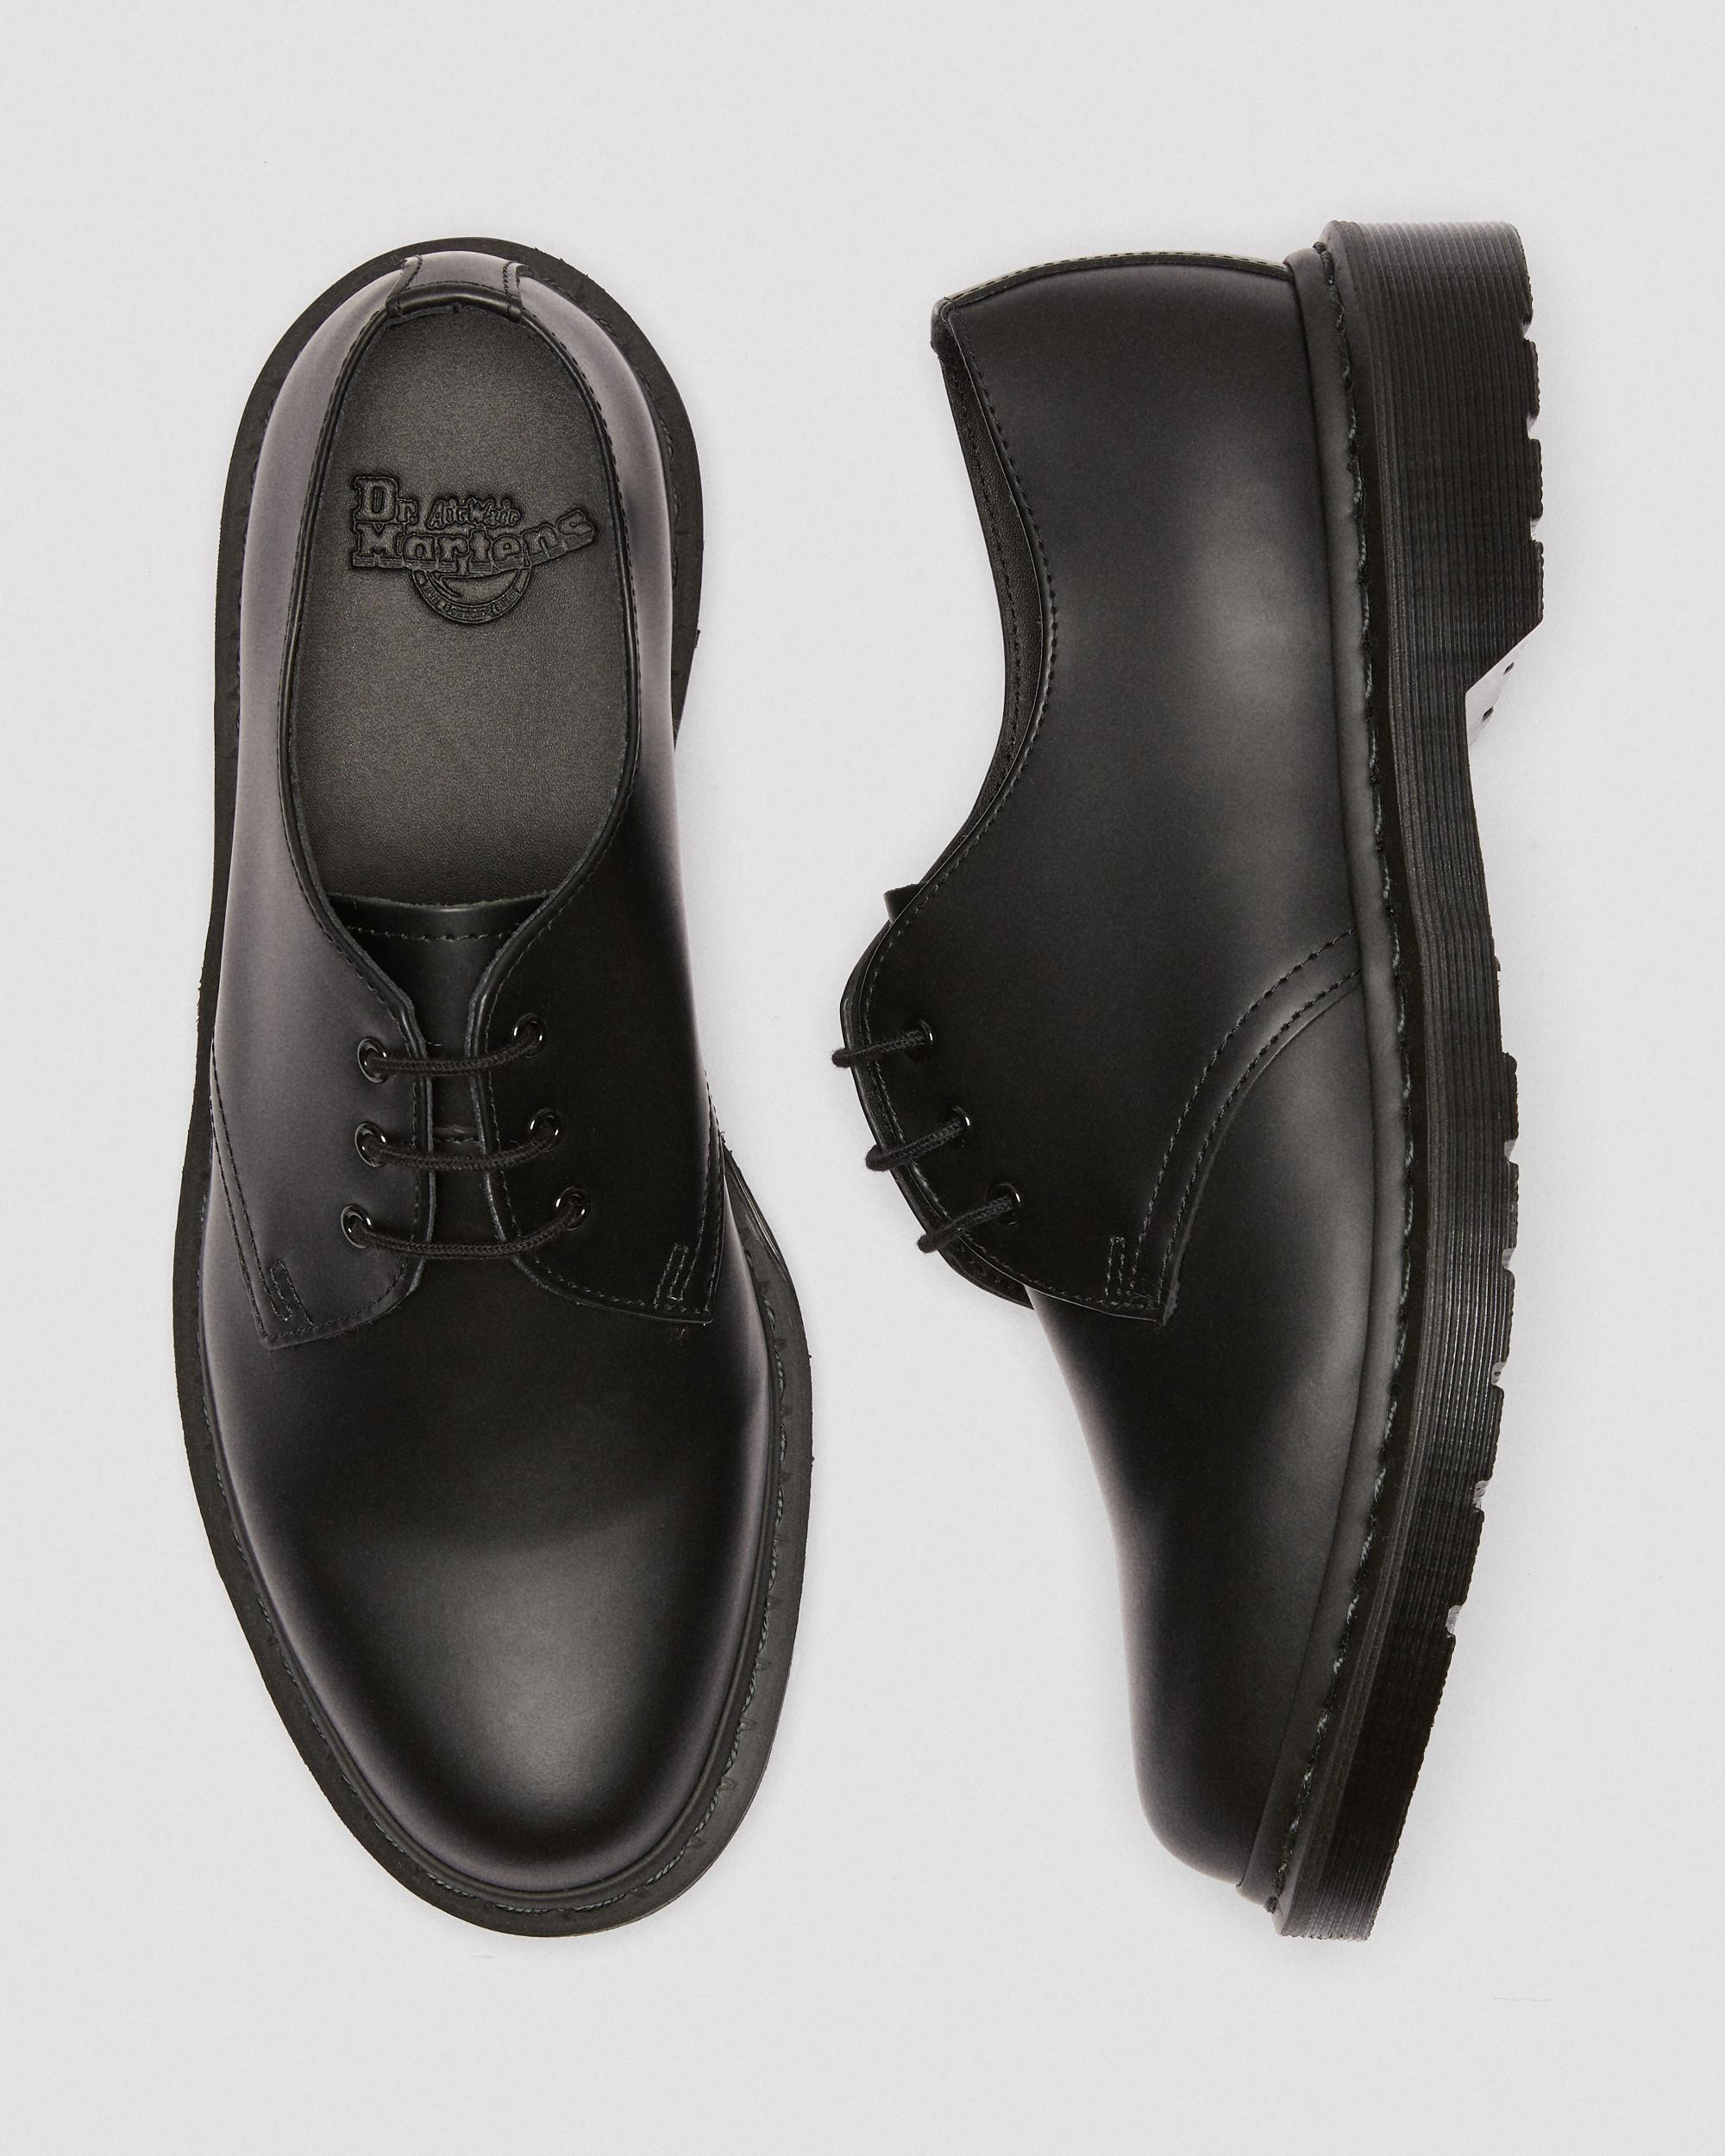 capoc charla Literatura 1461 Mono Smooth Leather Oxford Shoes | Dr. Martens